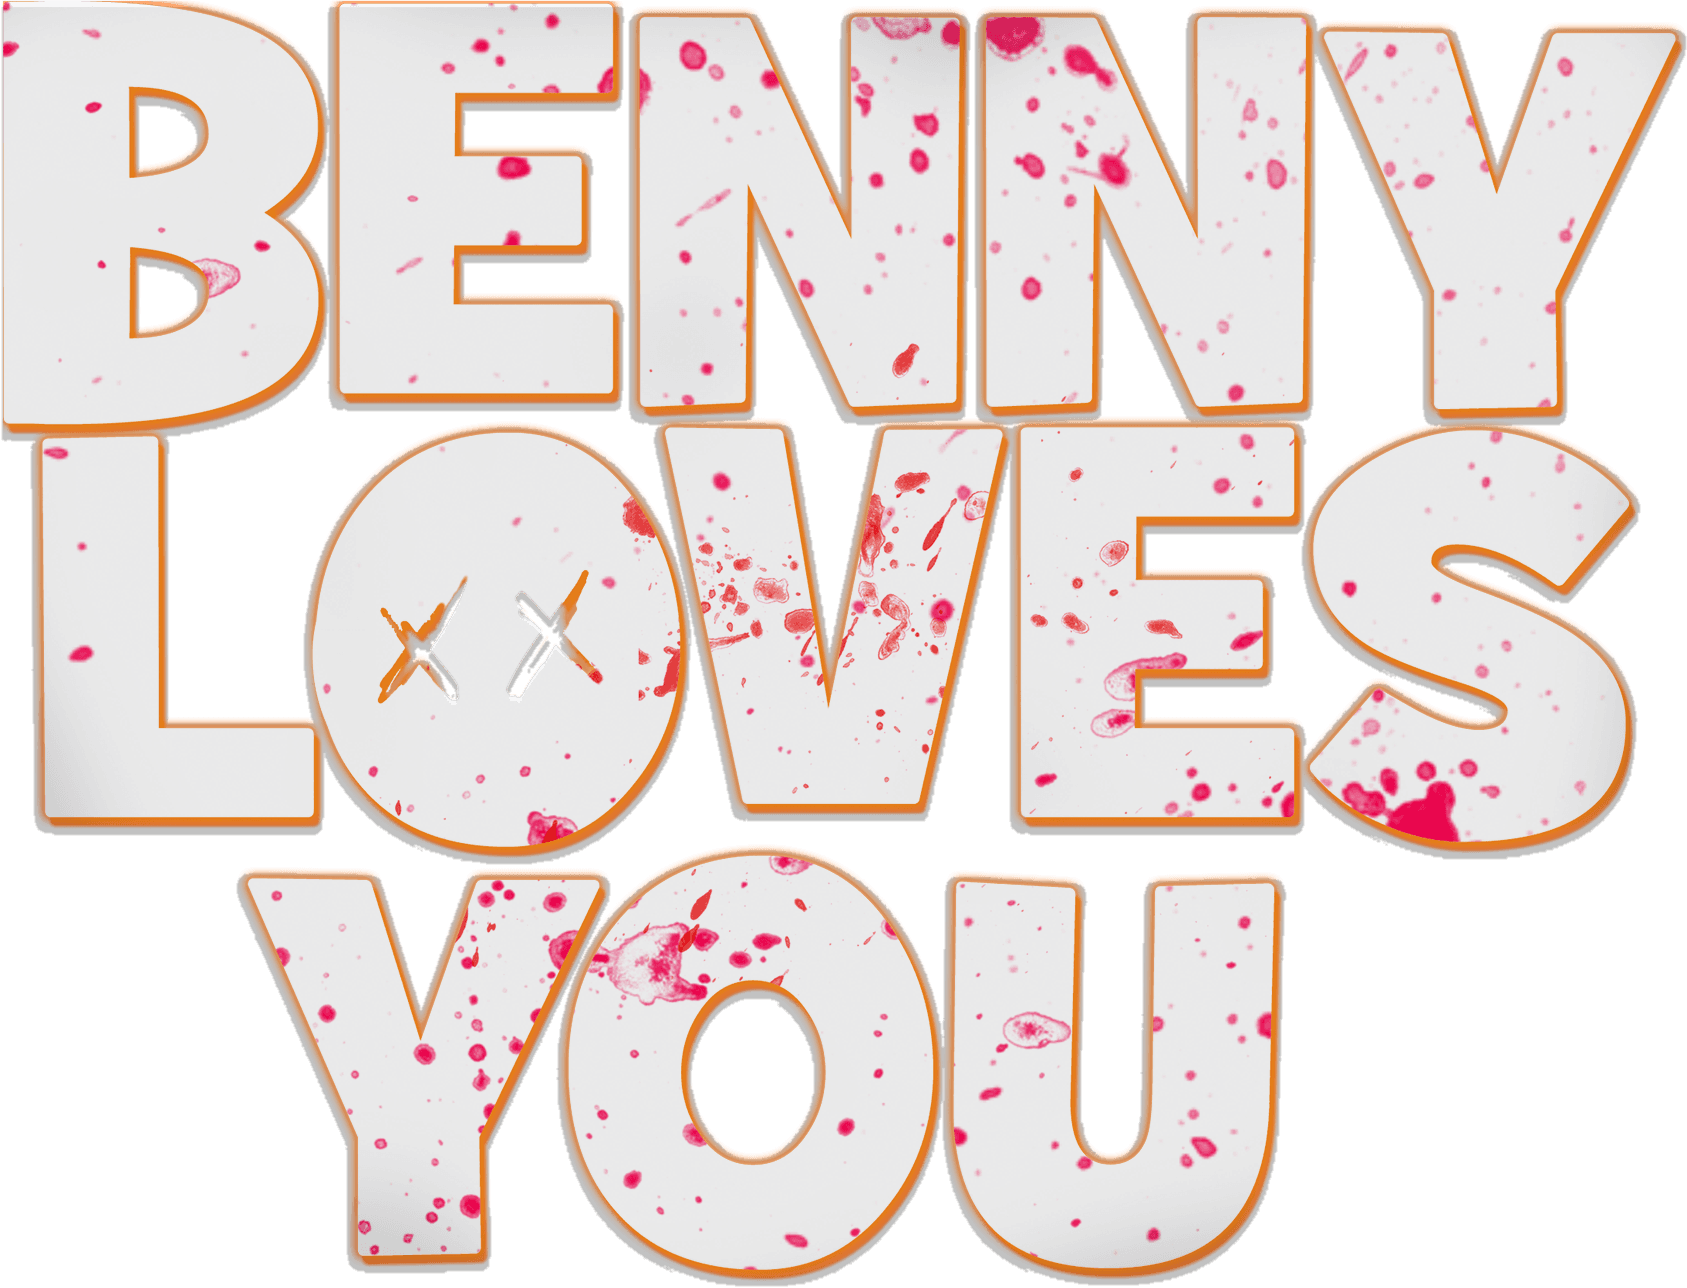 Benny Loves You logo